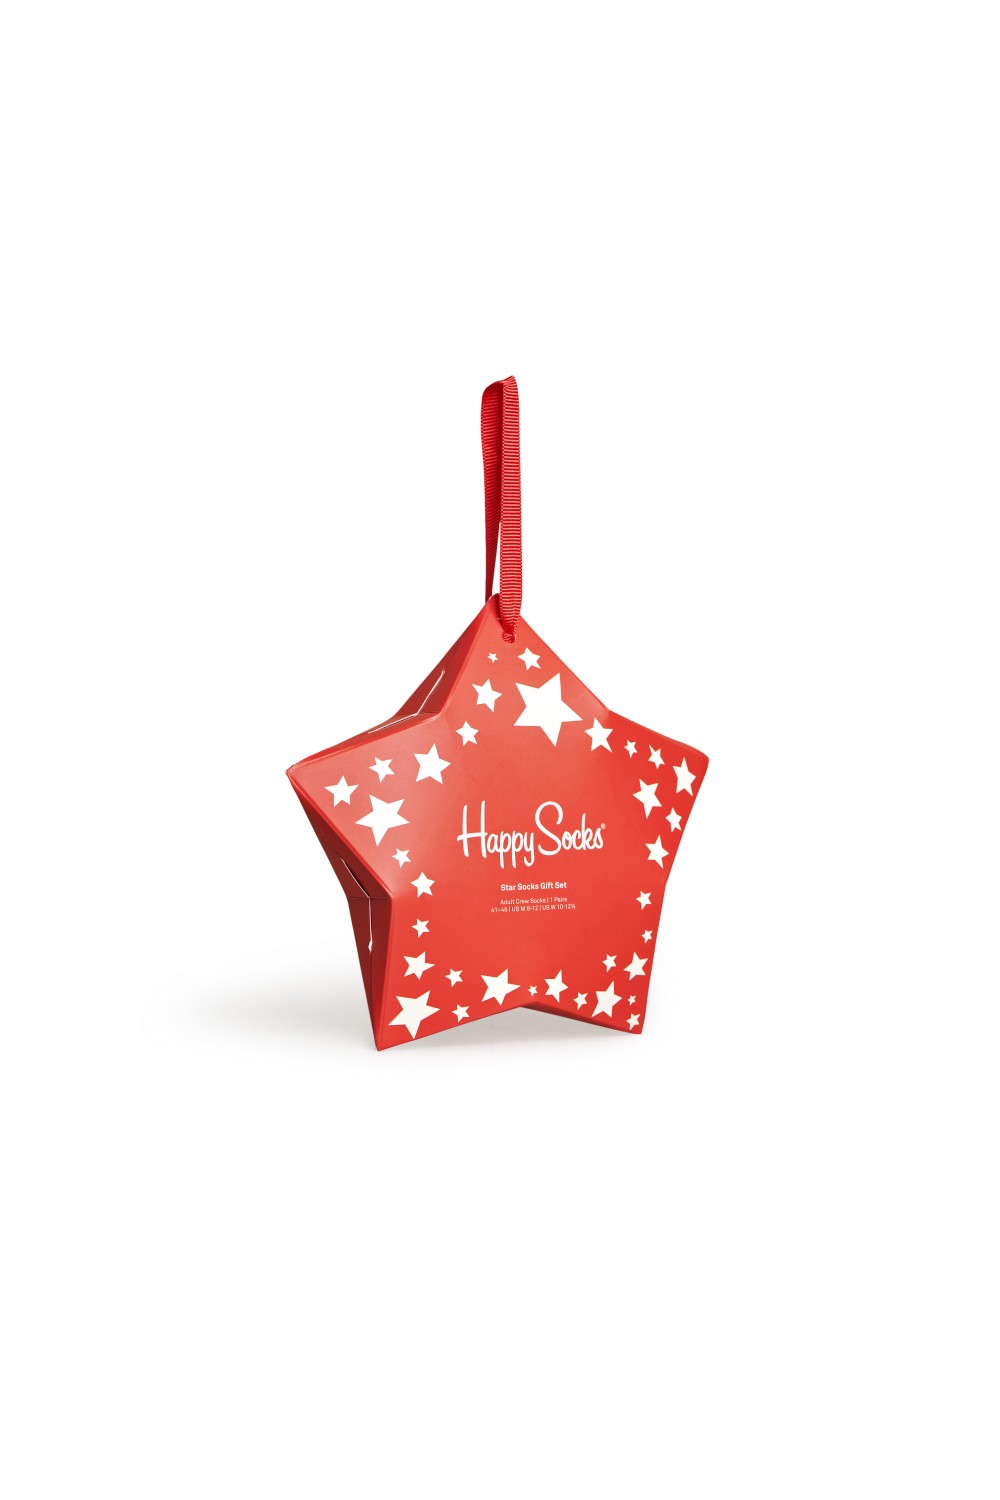 HAPPY SOCK STAR GIFT BOX XSTG01-4300